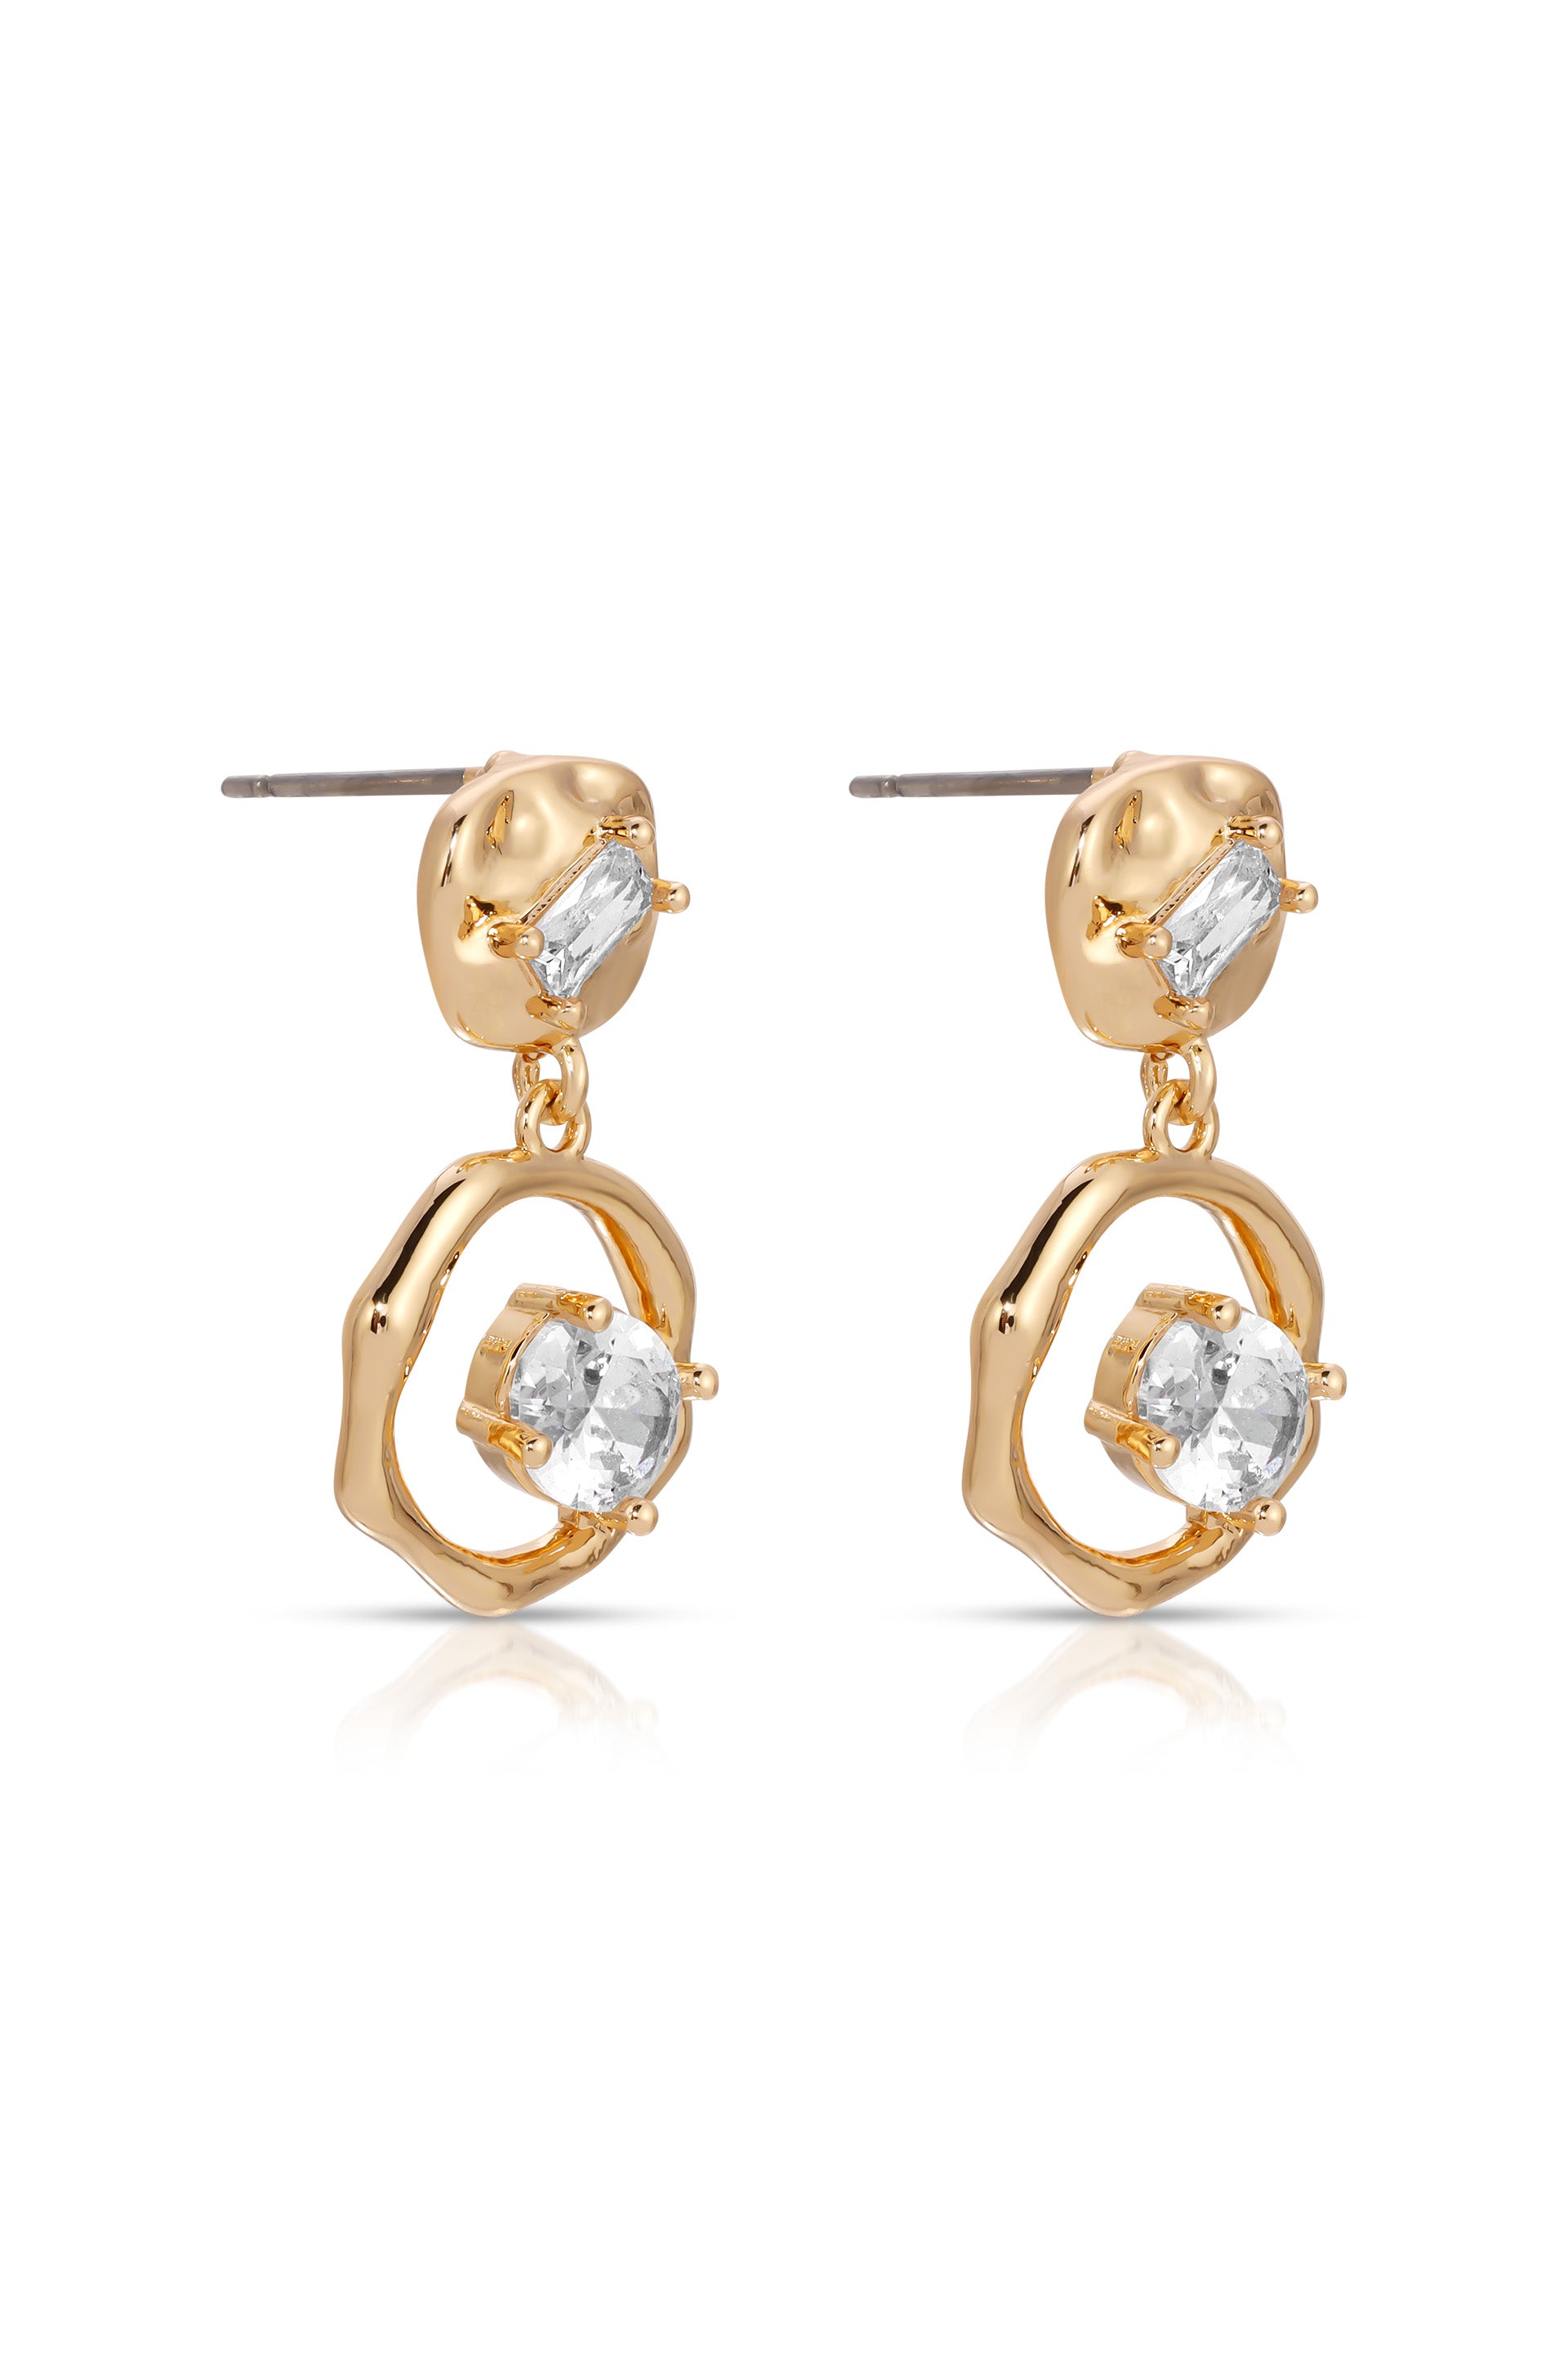 Celestial Mixed 18k Gold Plated Earring Stud Set – Ettika